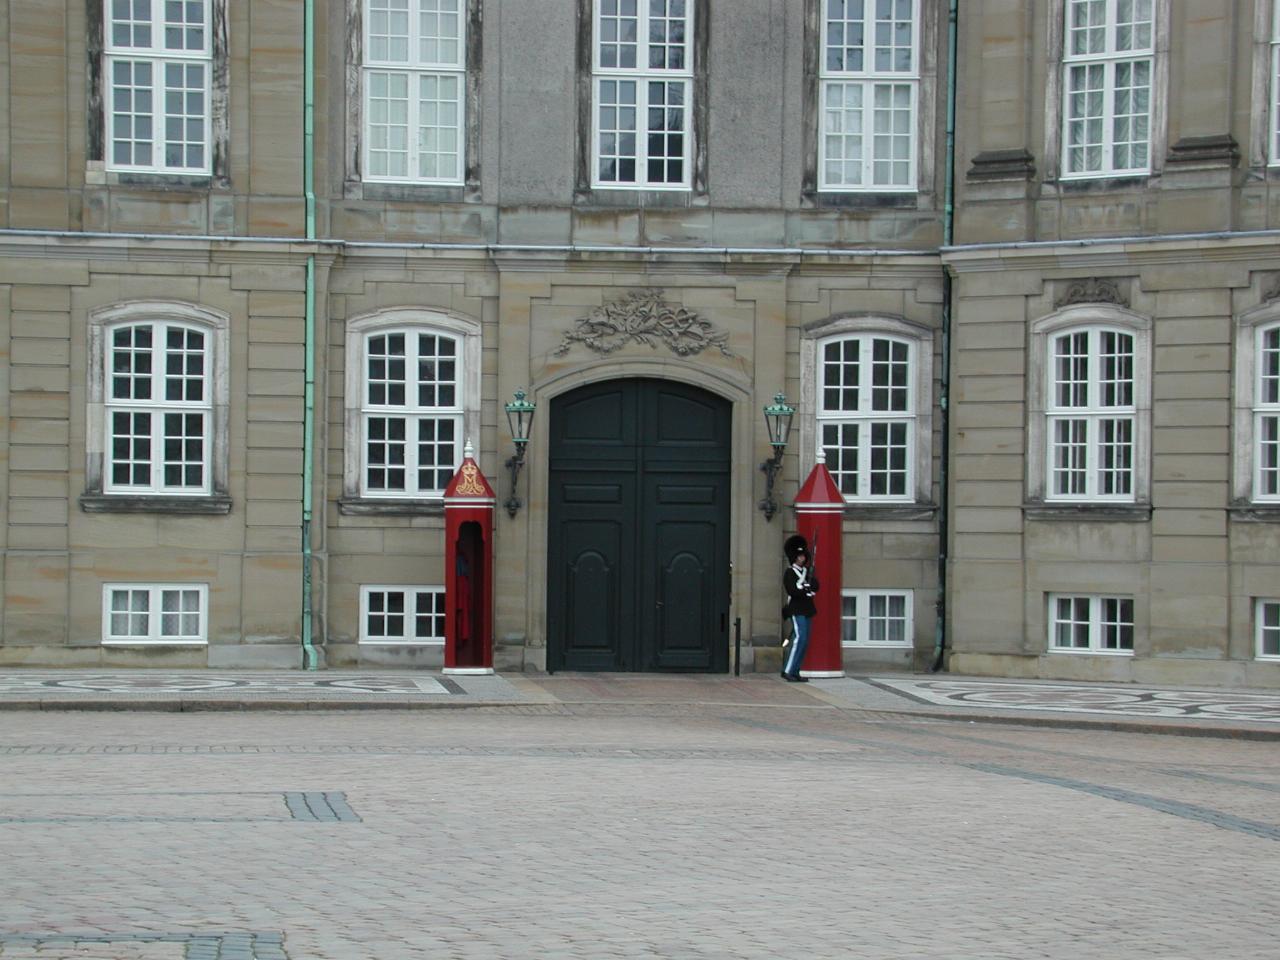 KPLU Viking Jazz: Amalienborg Plads (Plaza): Guard on duty